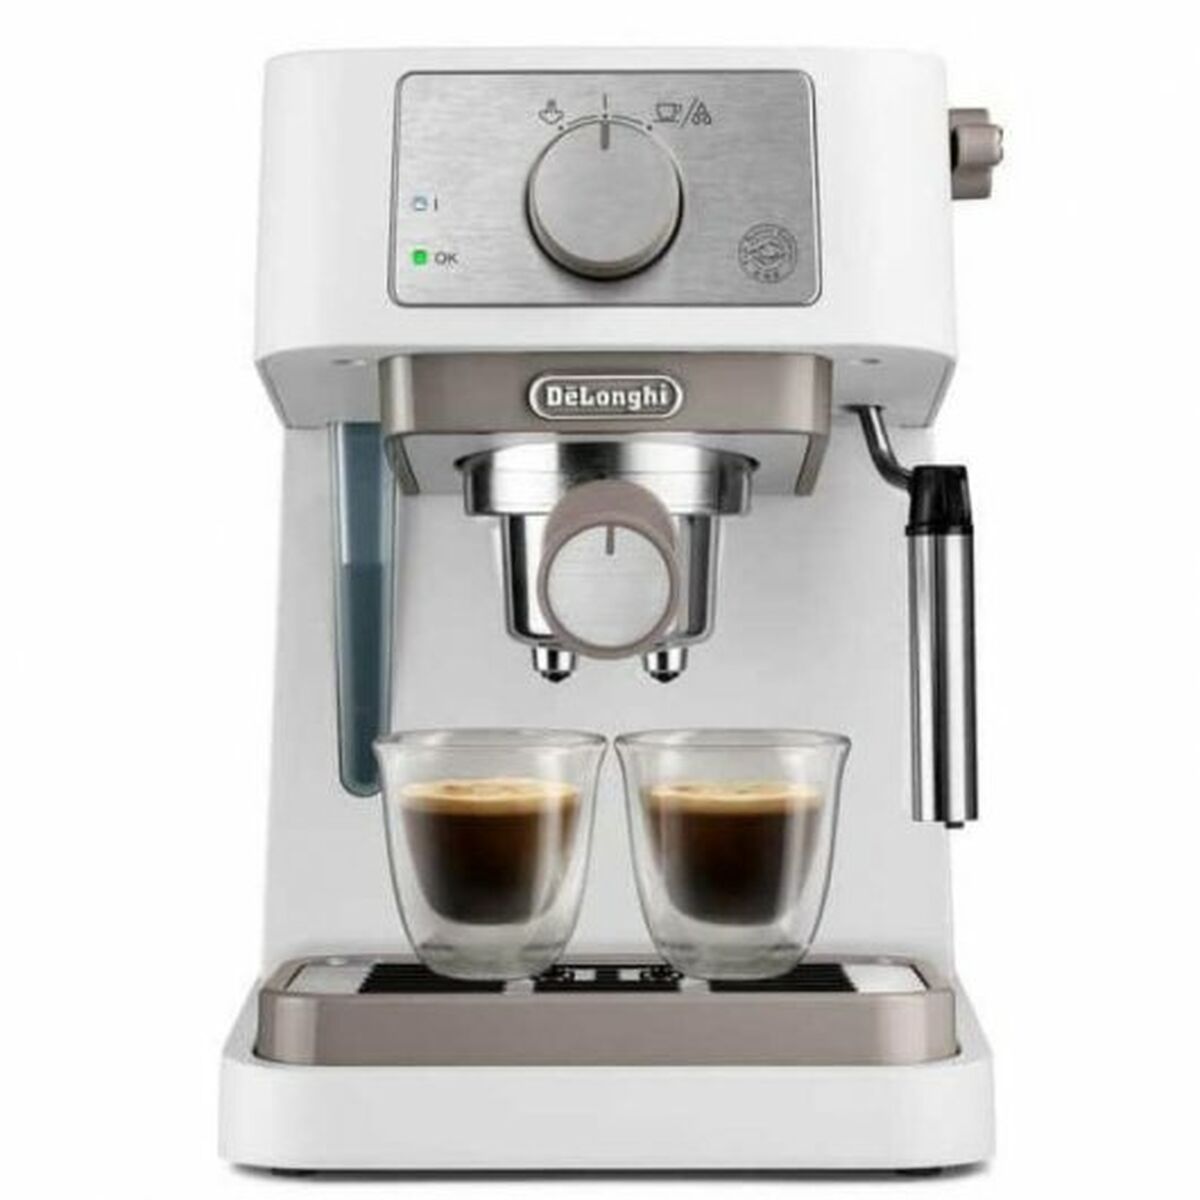 Express kaffemaskine DeLonghi Sølv